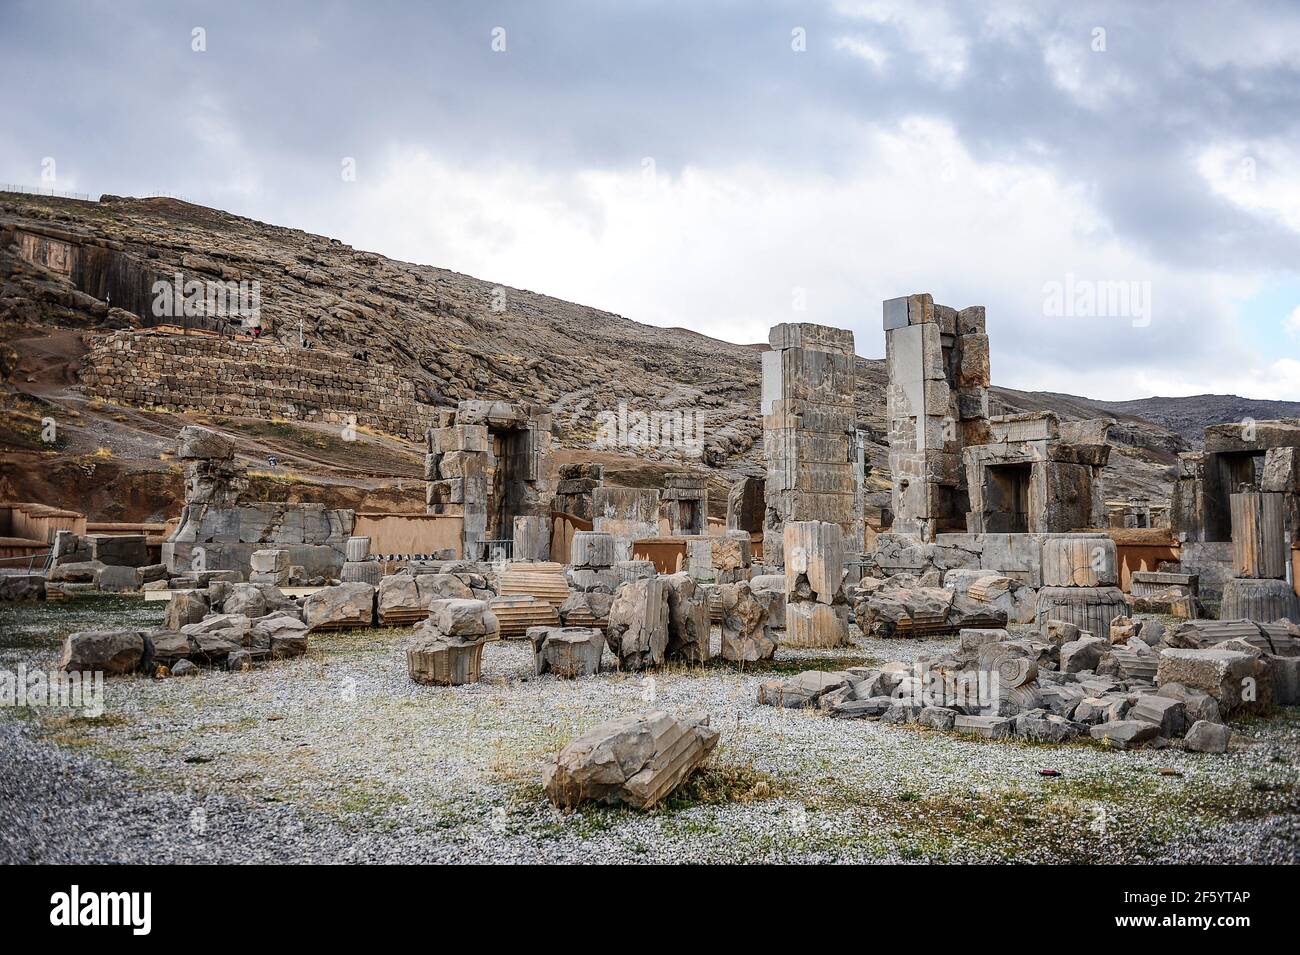 Ruins of the ancient ceremonial capital of the Persian empire Persepolis near Shiraz in Iran Stock Photo